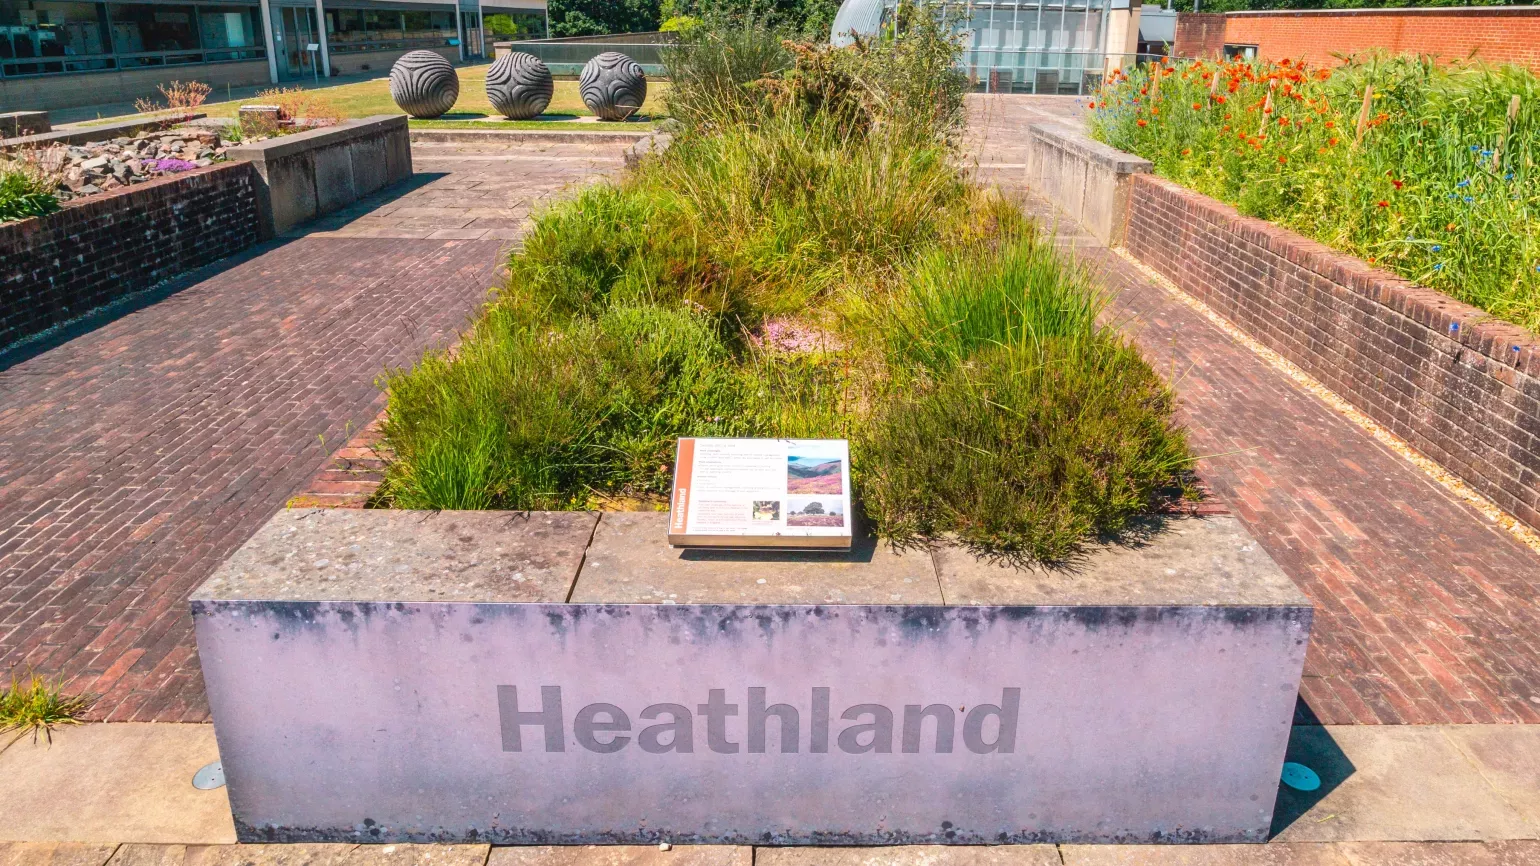 A planting of heathland plants